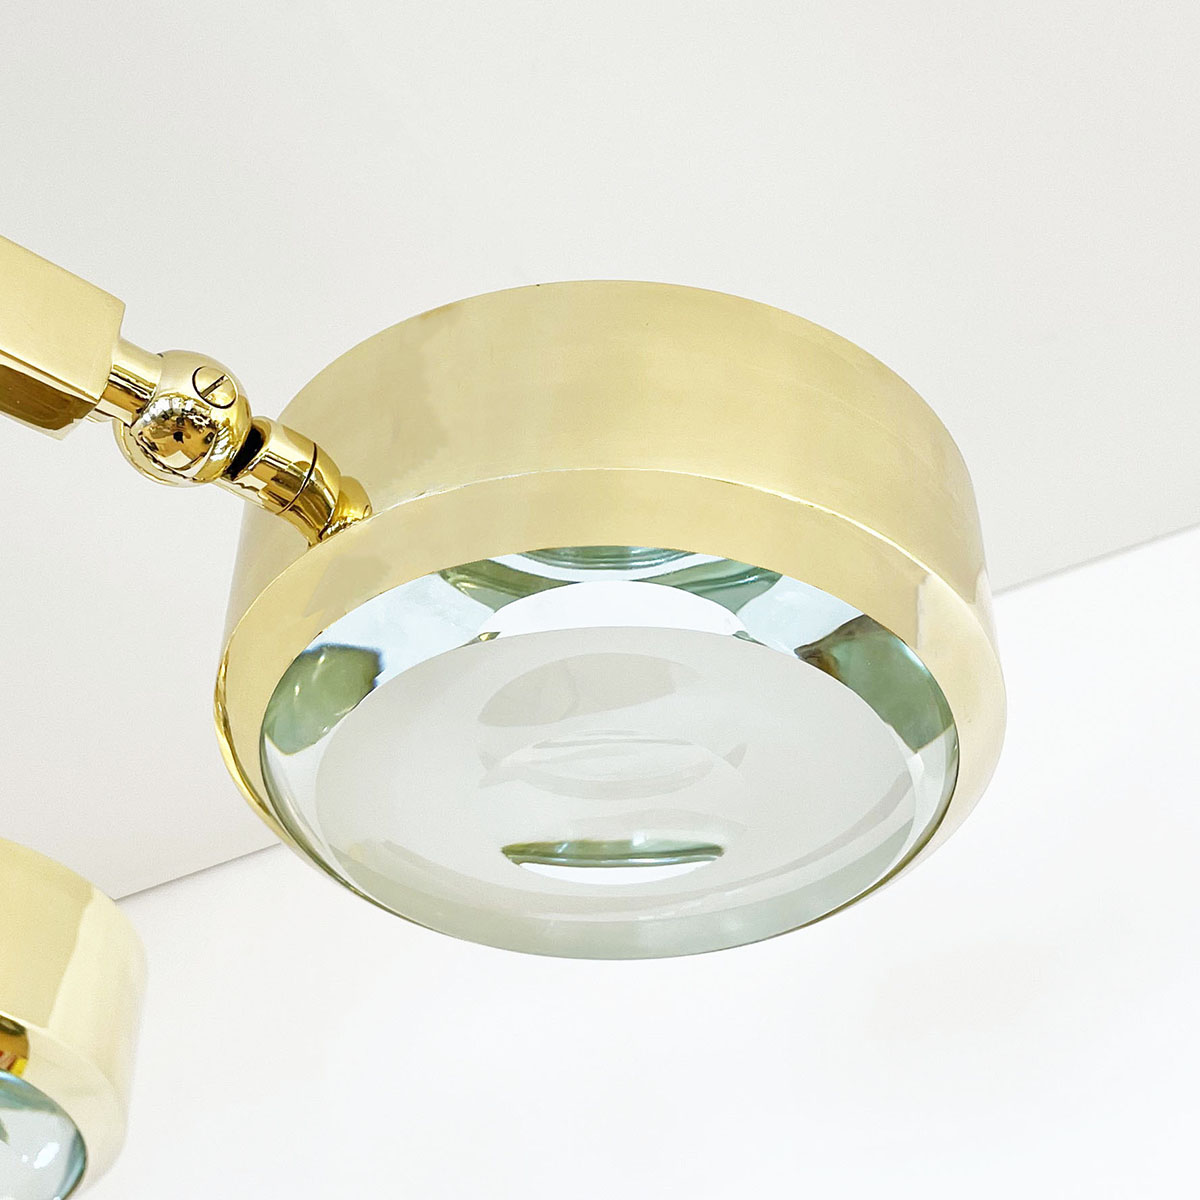 Oculus Ceiling Light-Oval Version, gaspare asaro